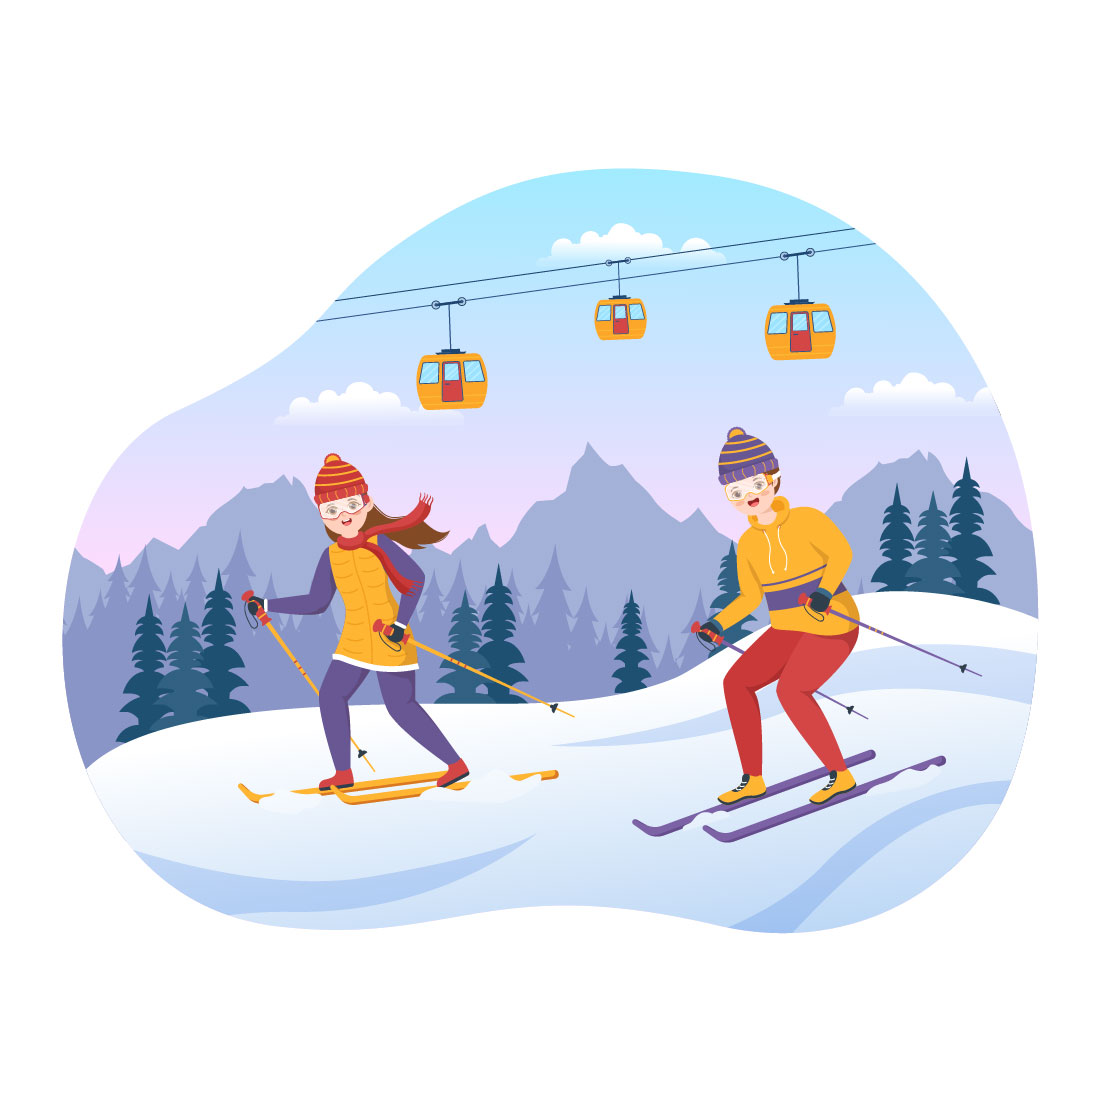 13 Ski Winter Sport Activities Illustration main cover.